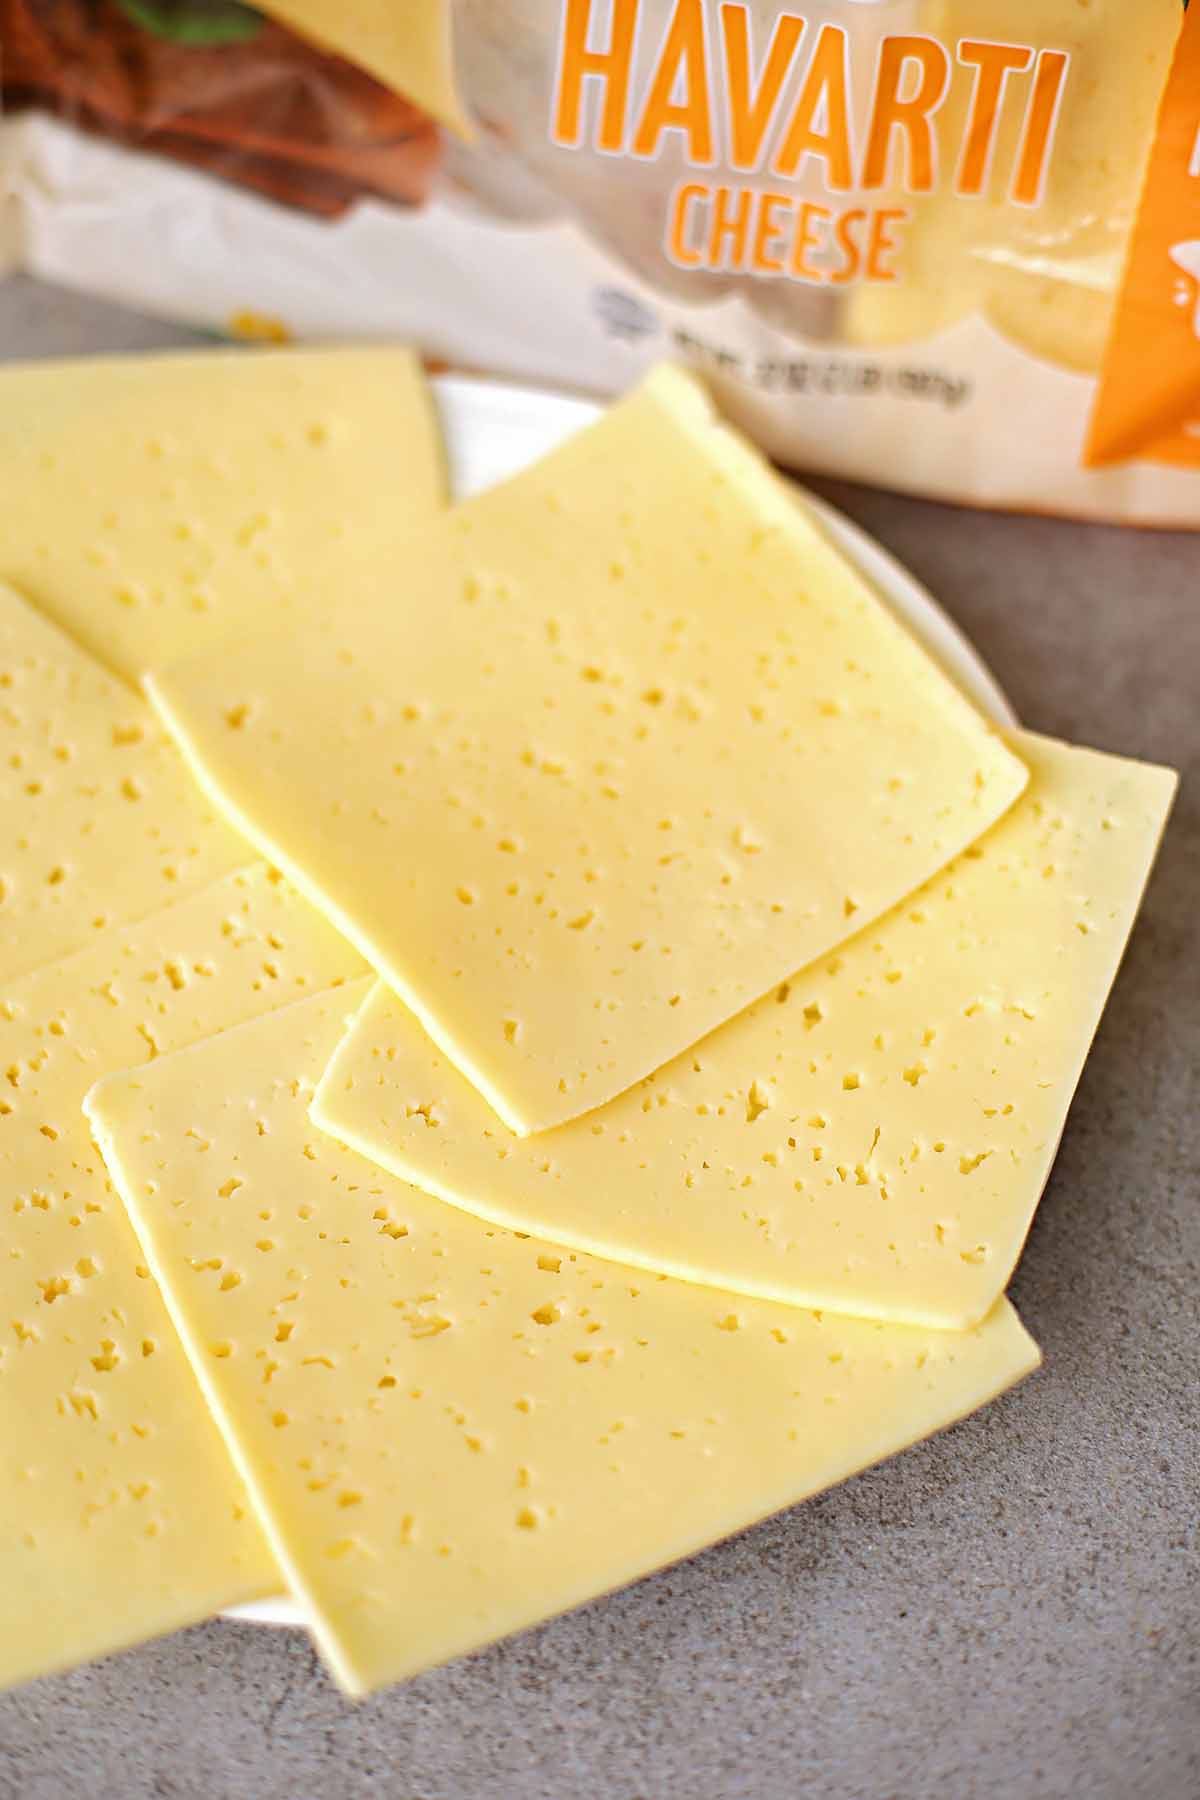 Havarti cheese Substitute (10 Ideal Alternatives)